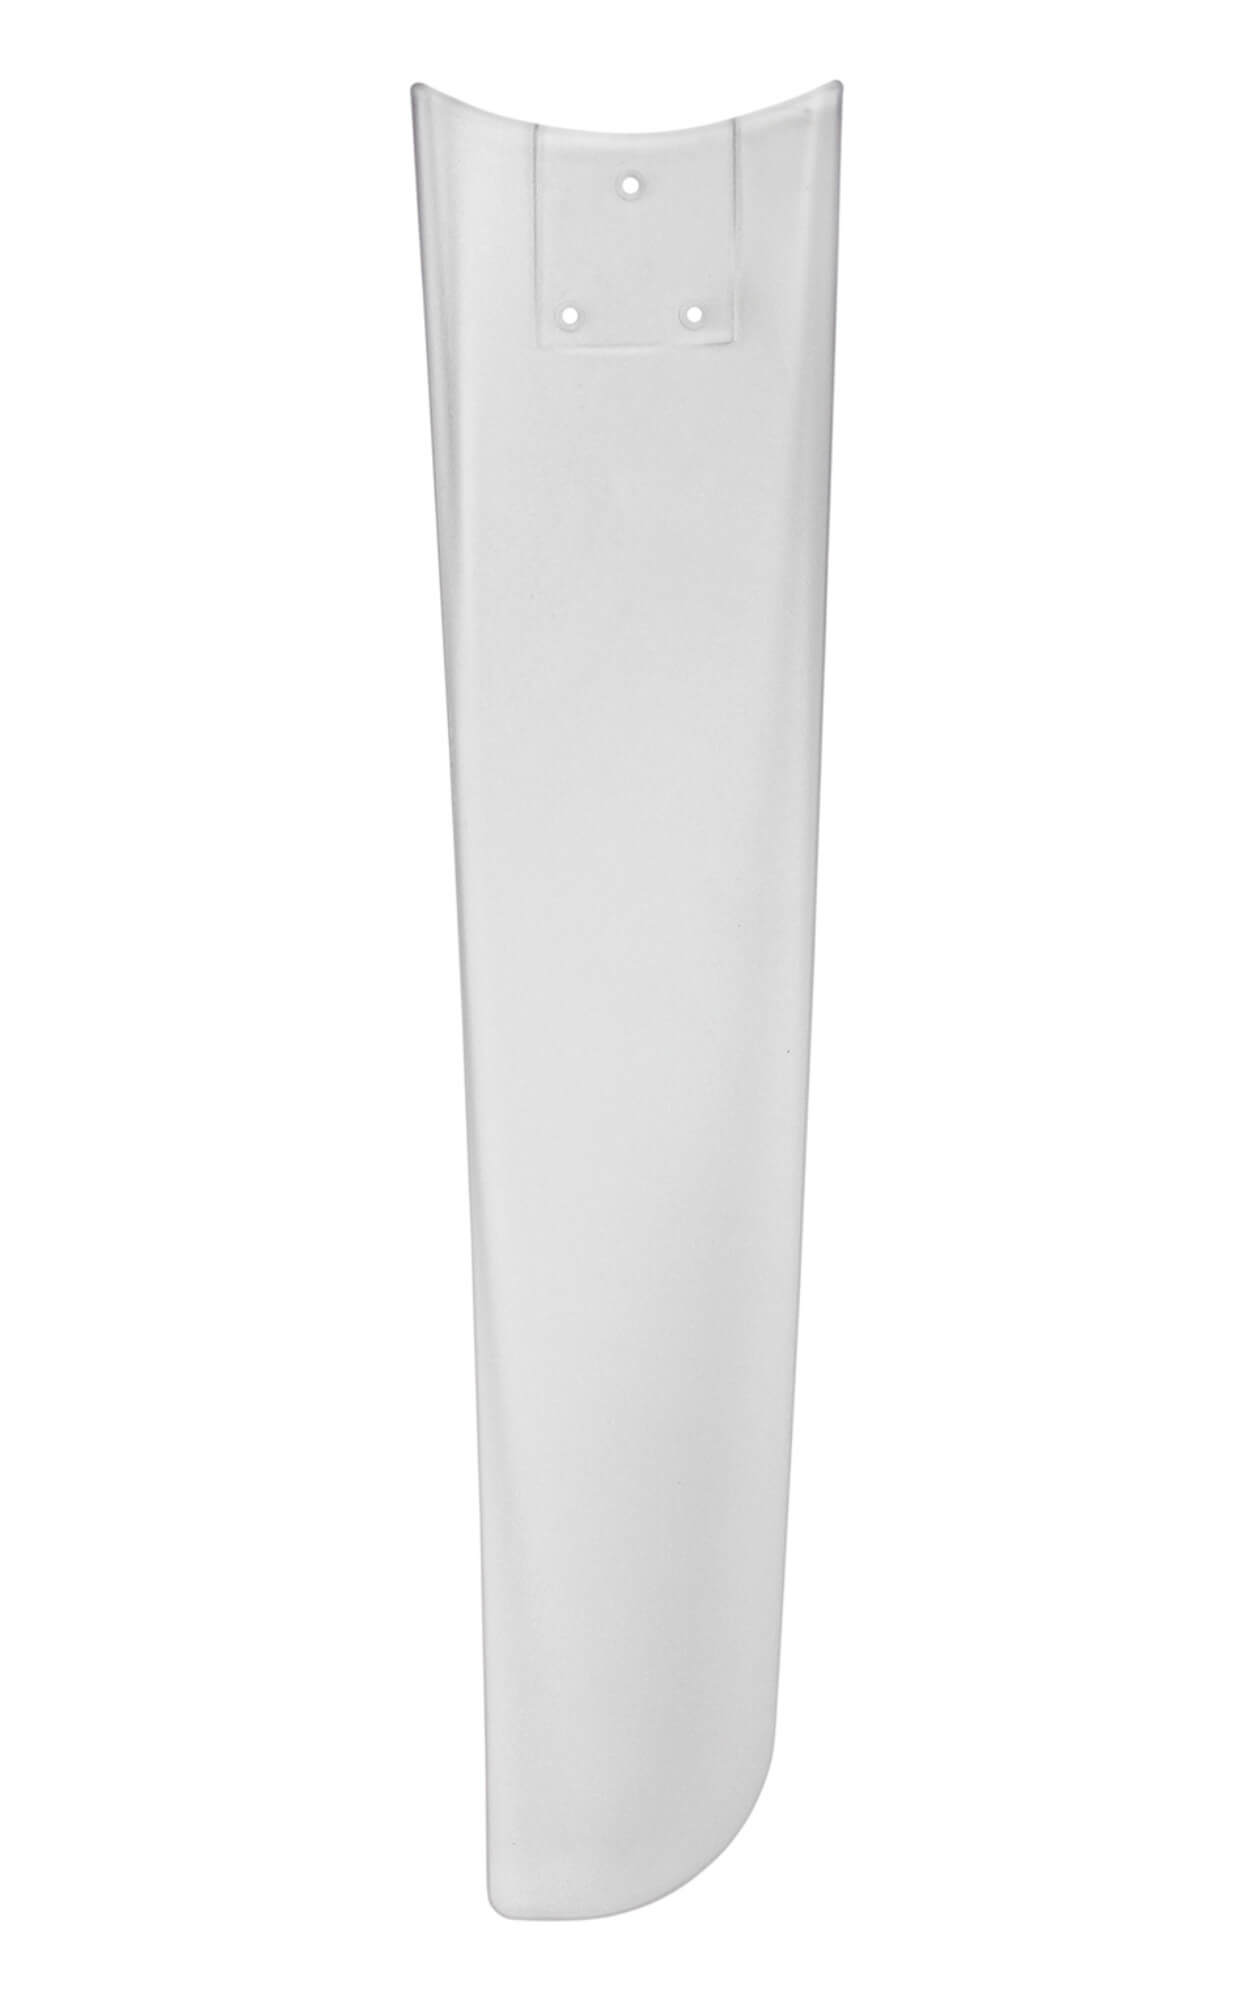 CASAFAN Mirage Transparent Deckenventilator Watt) (62